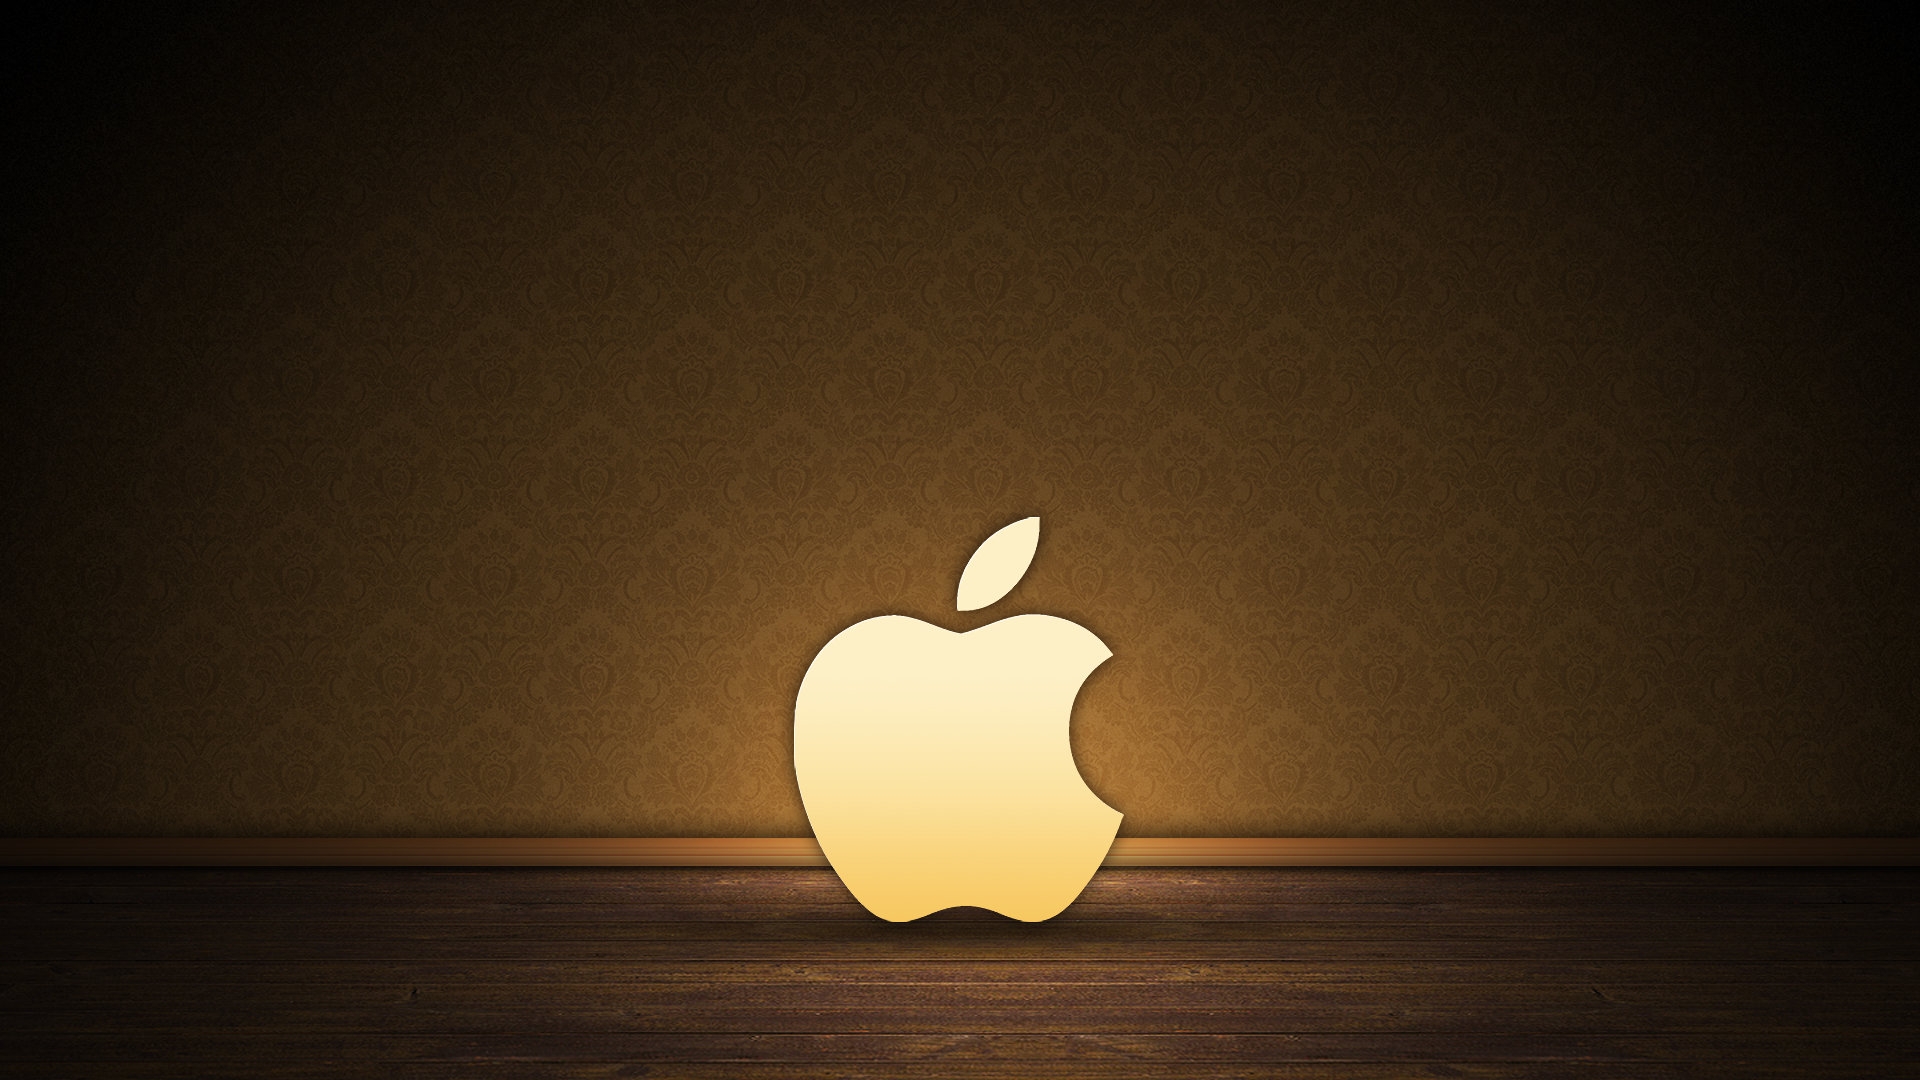 [75+] Cool Apple Logo Wallpaper on WallpaperSafari